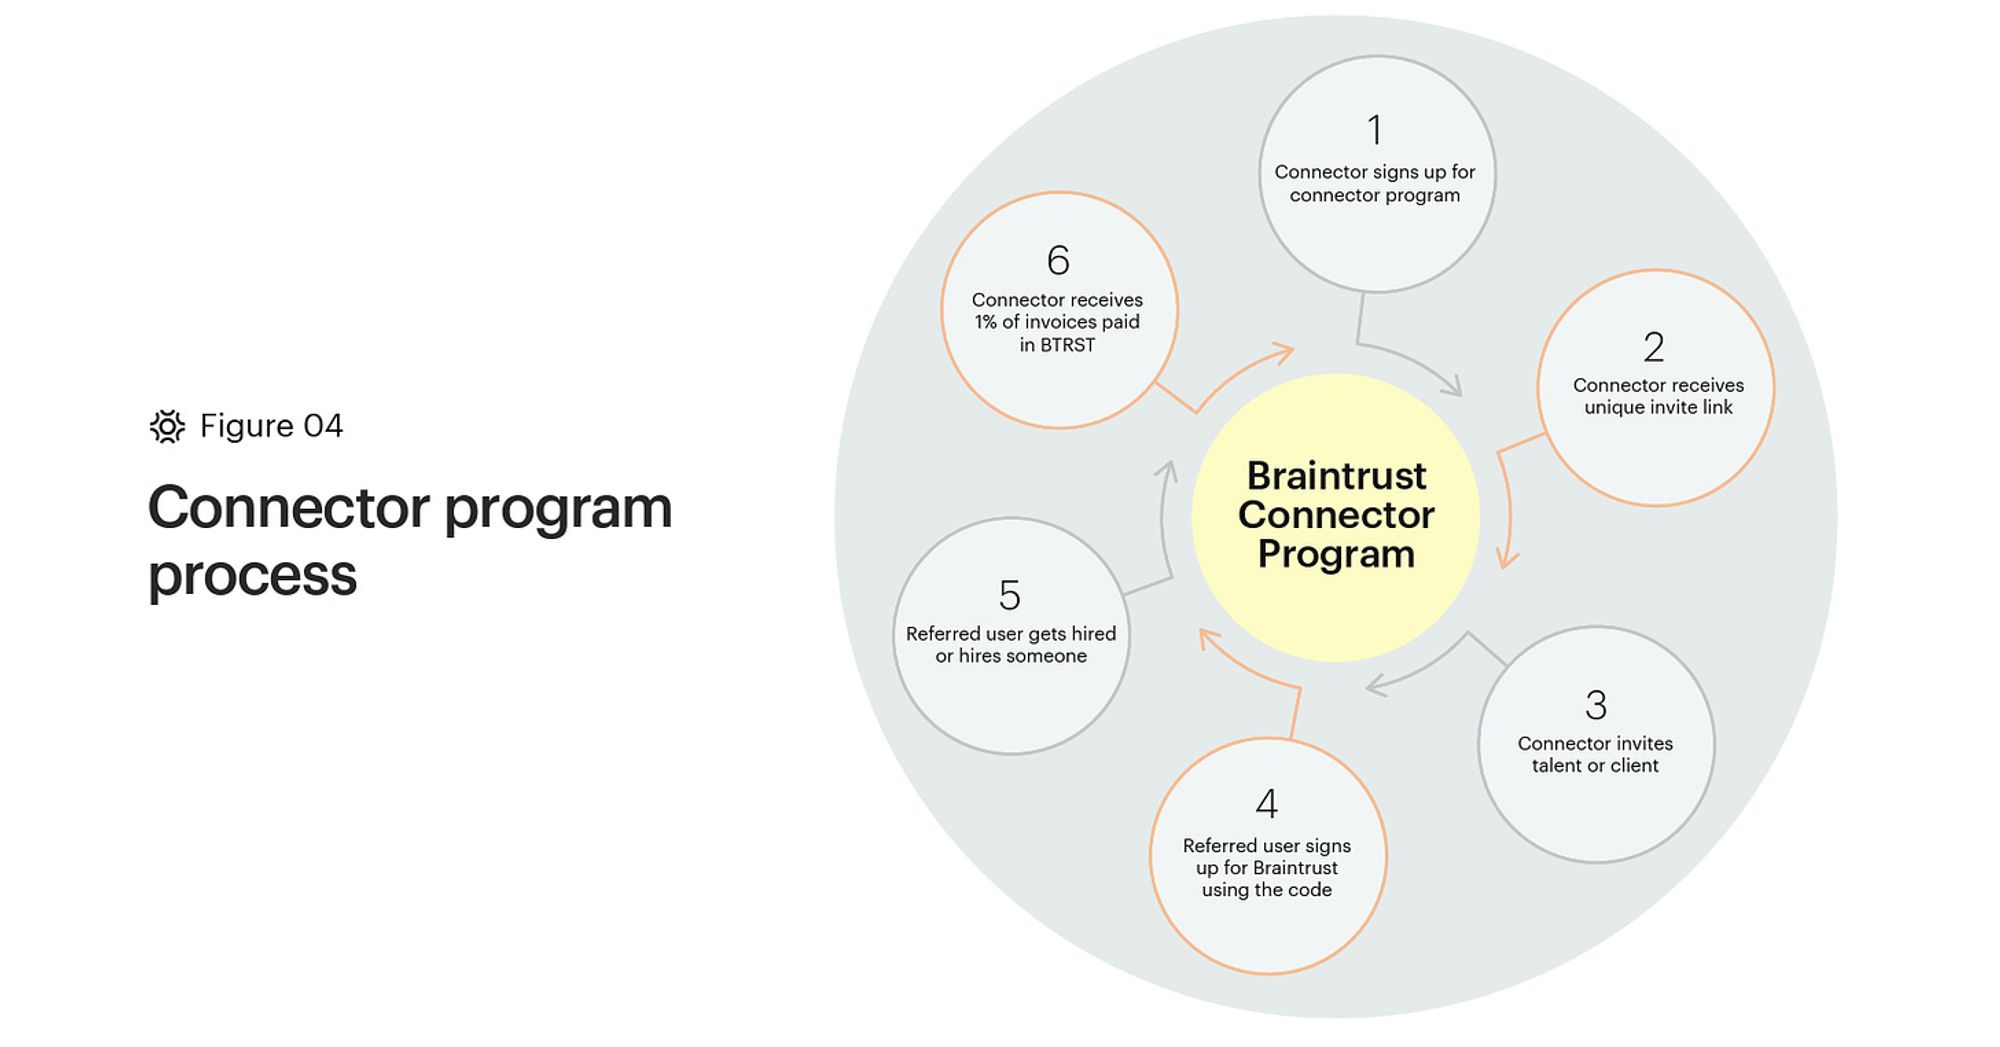 Braintrust Connector Program return value to talent connectors